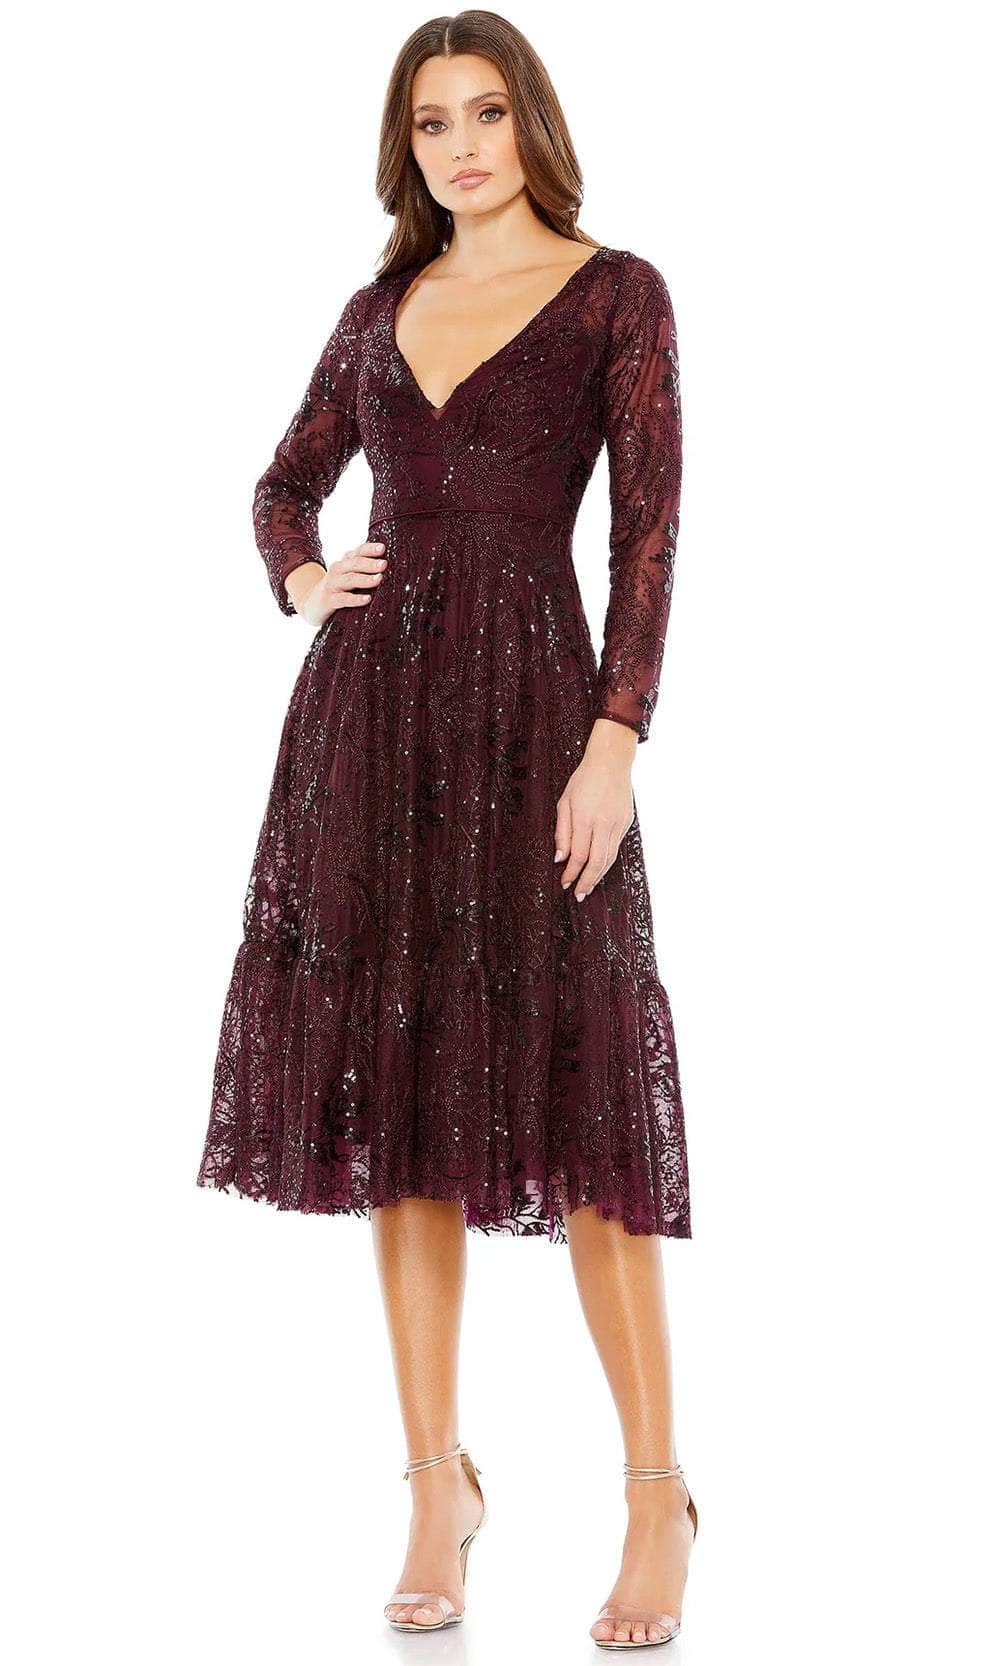 Mac Duggal 68001 - Long Sleeve Embellished Cocktail Dress
